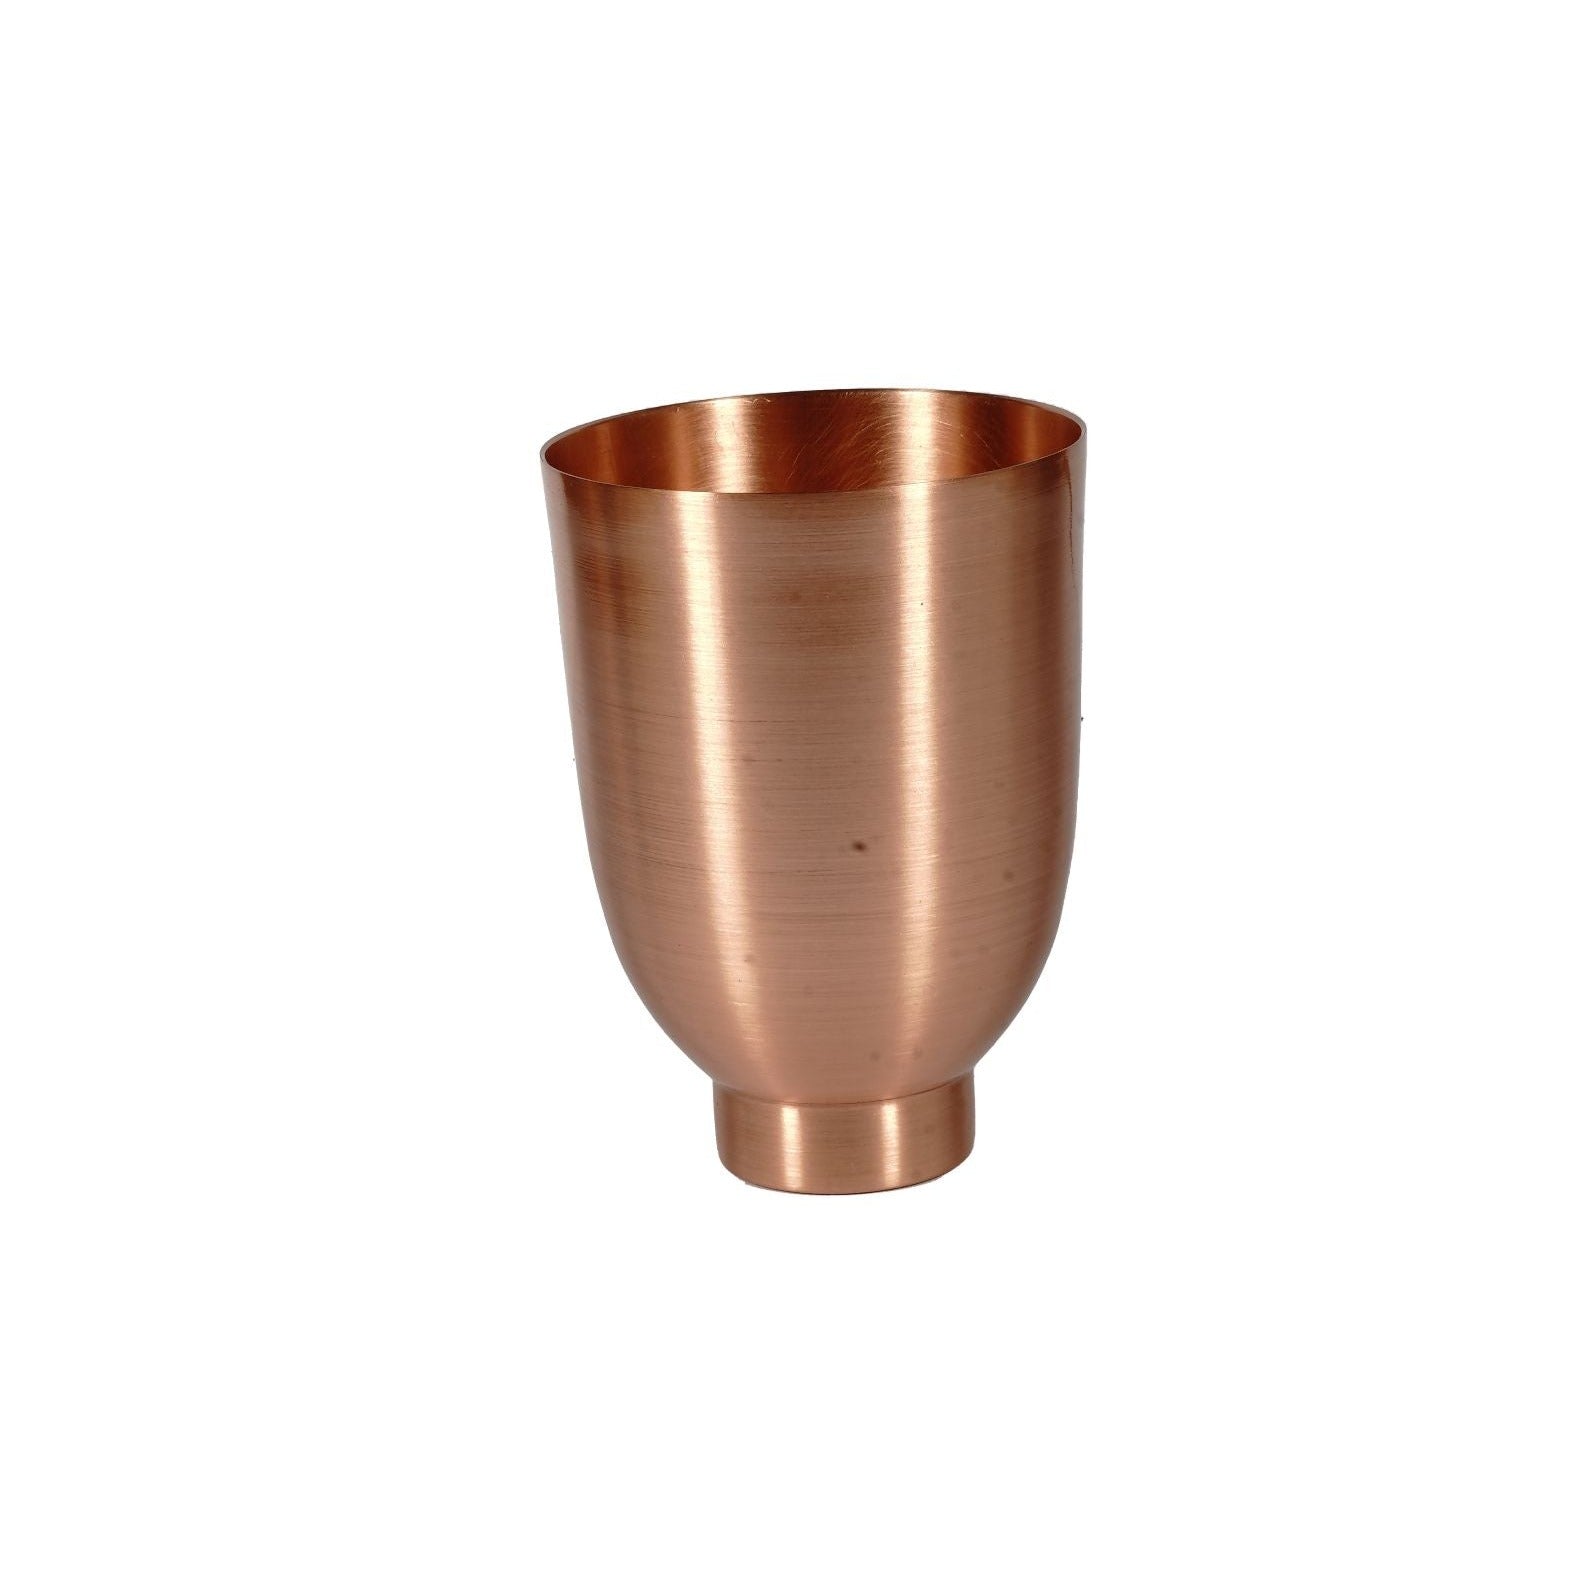 Siya Copper Glass set of 2 Decor Serving & Dining Metal Craft